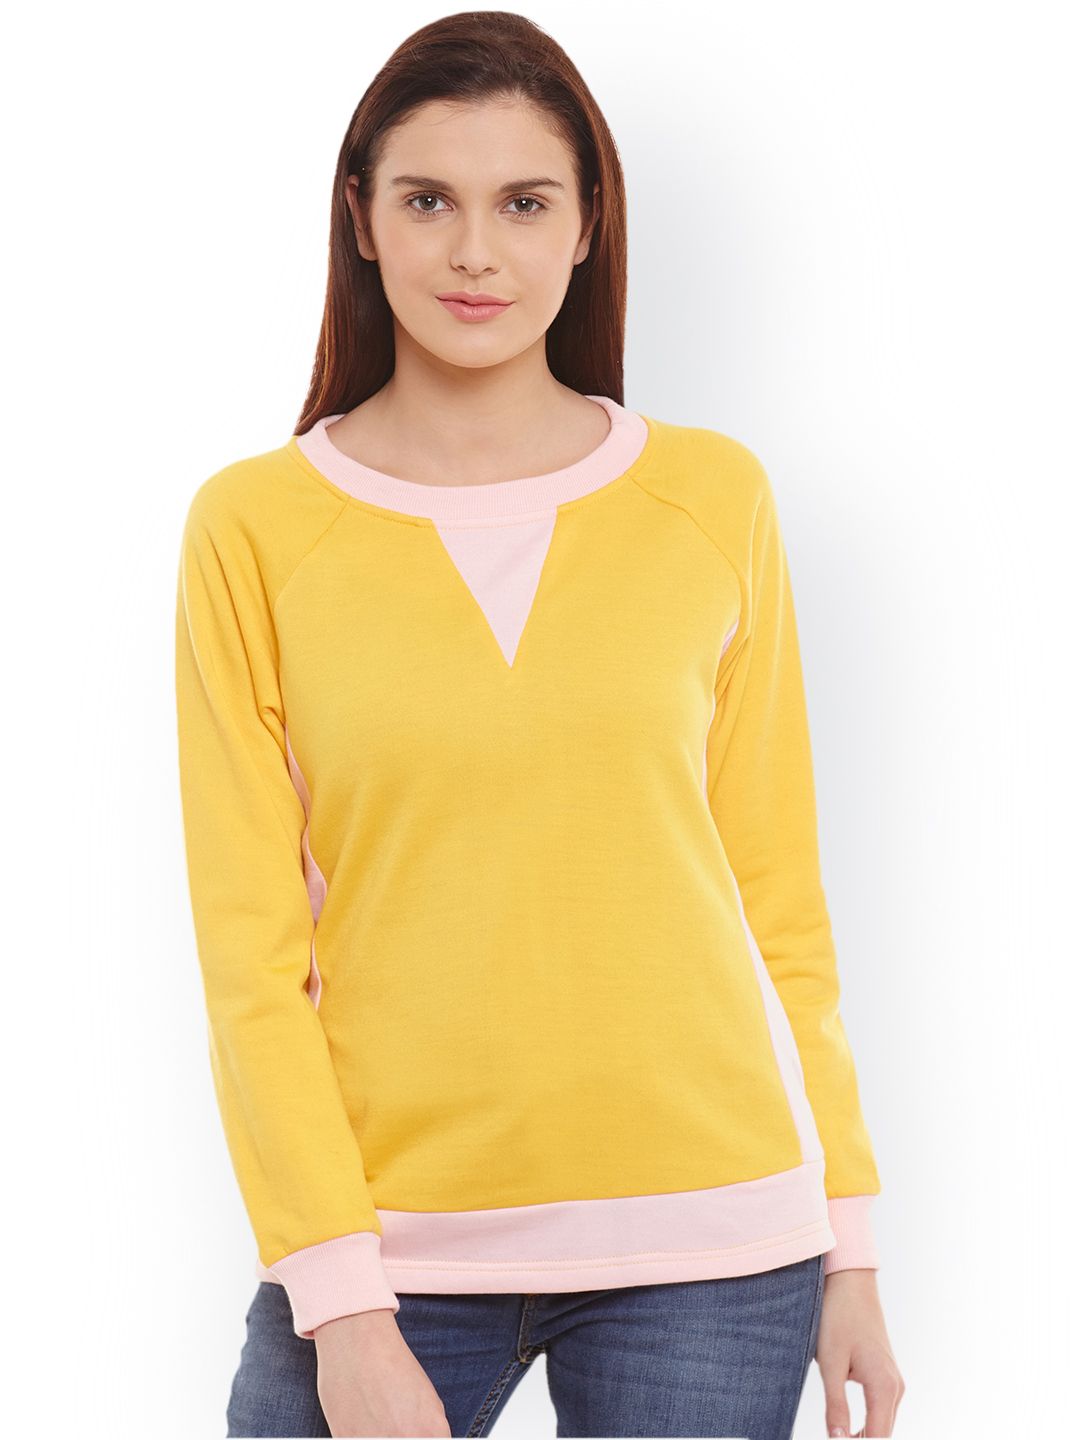 Belle Fille Women Yellow & Pink Sweatshirt Price in India